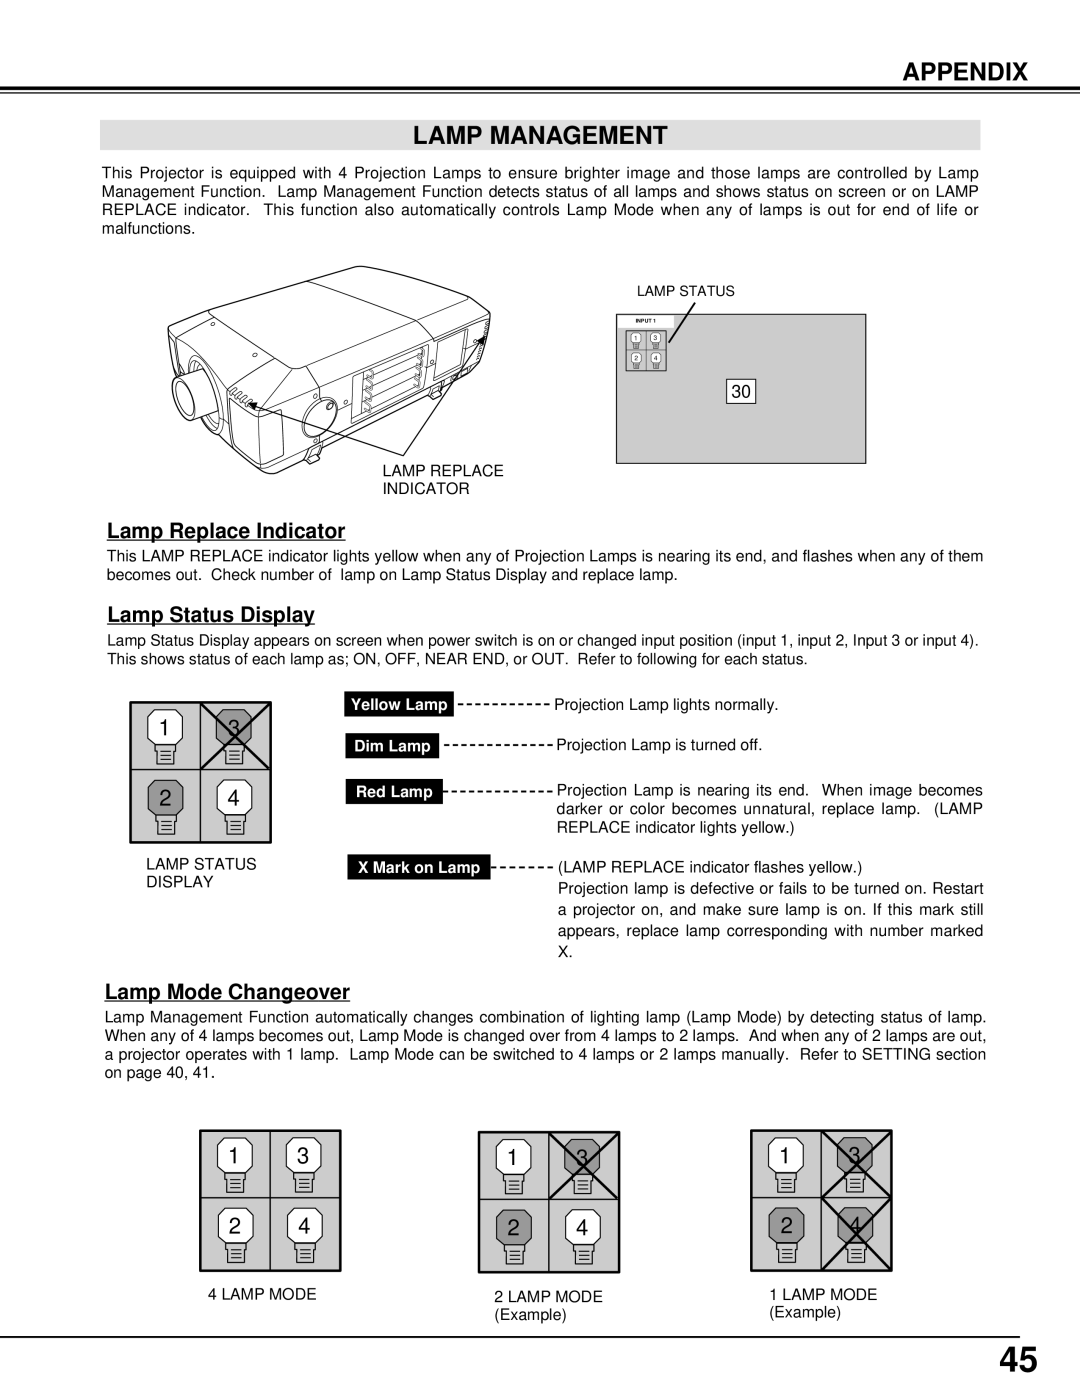 Eiki LC-XT3 instruction manual Appendix Lamp Management, Yellow Lamp Dim Lamp Red Lamp Mark on Lamp 